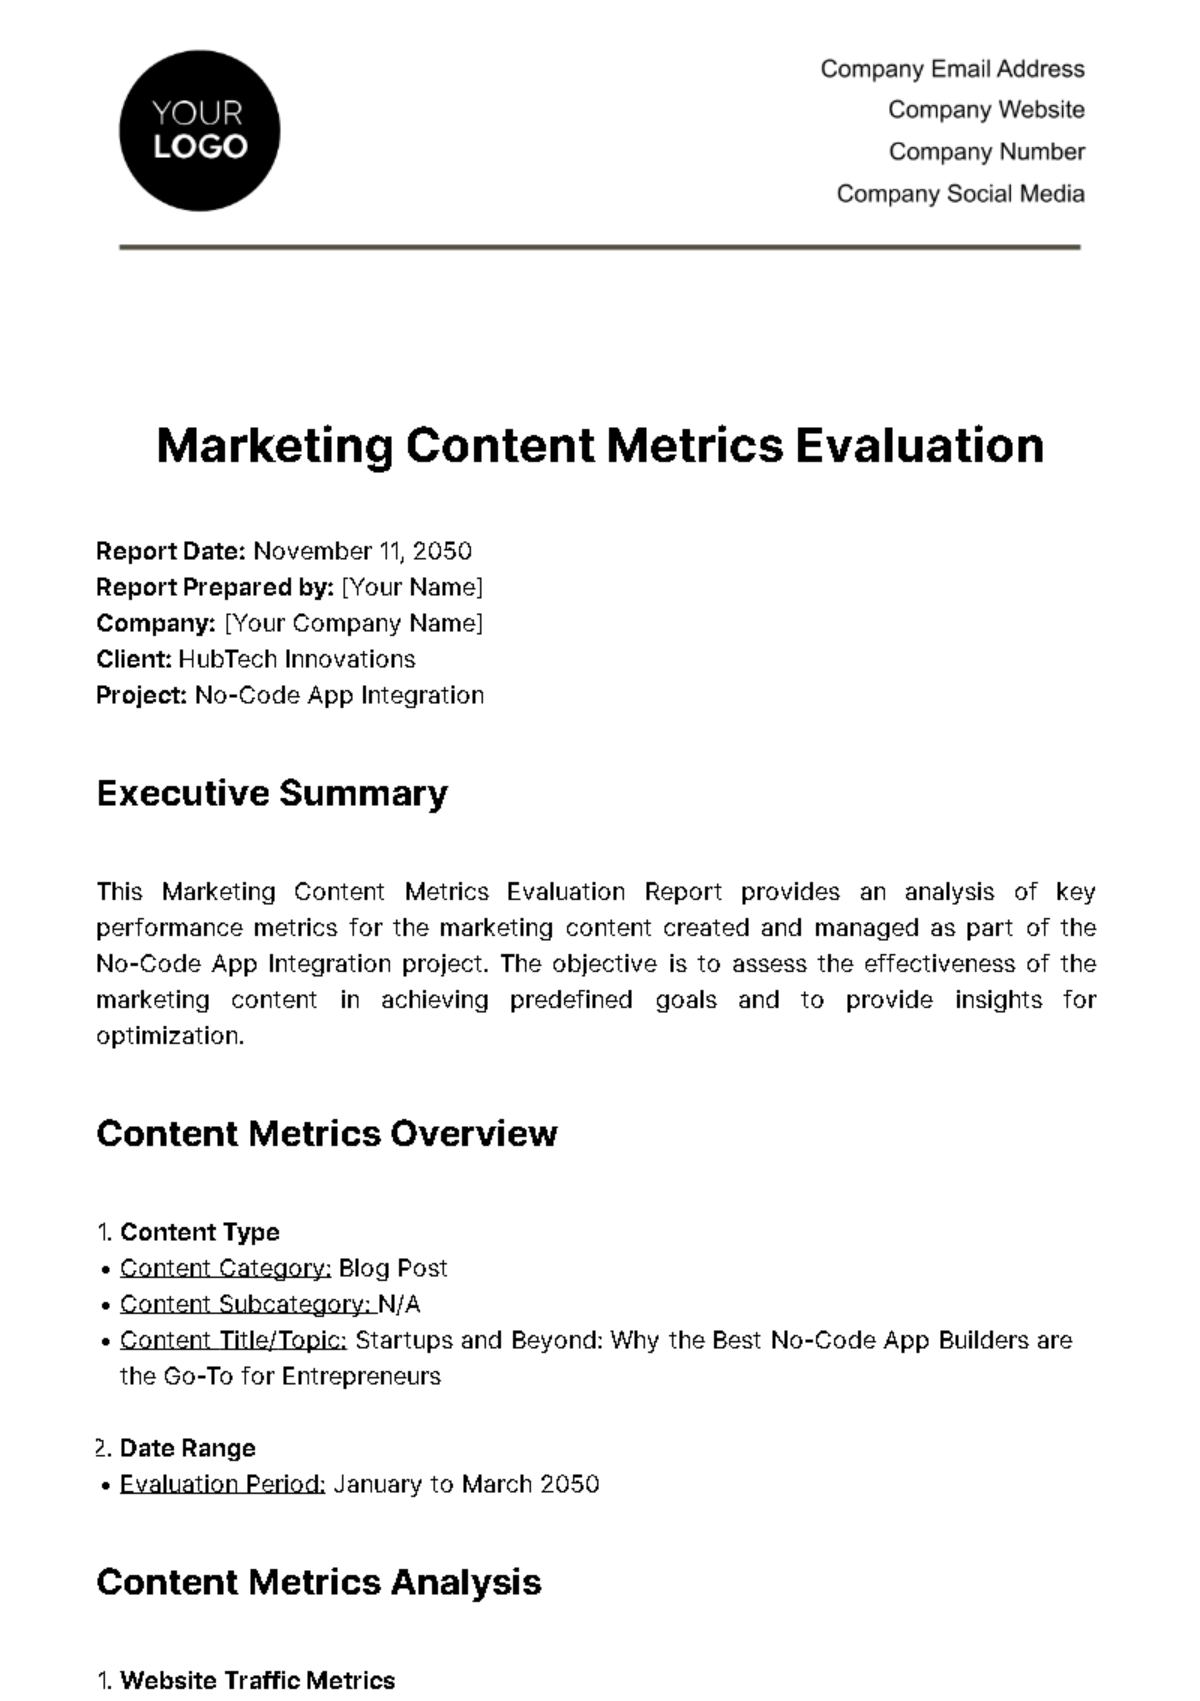 Marketing Content Metrics Evaluation Template